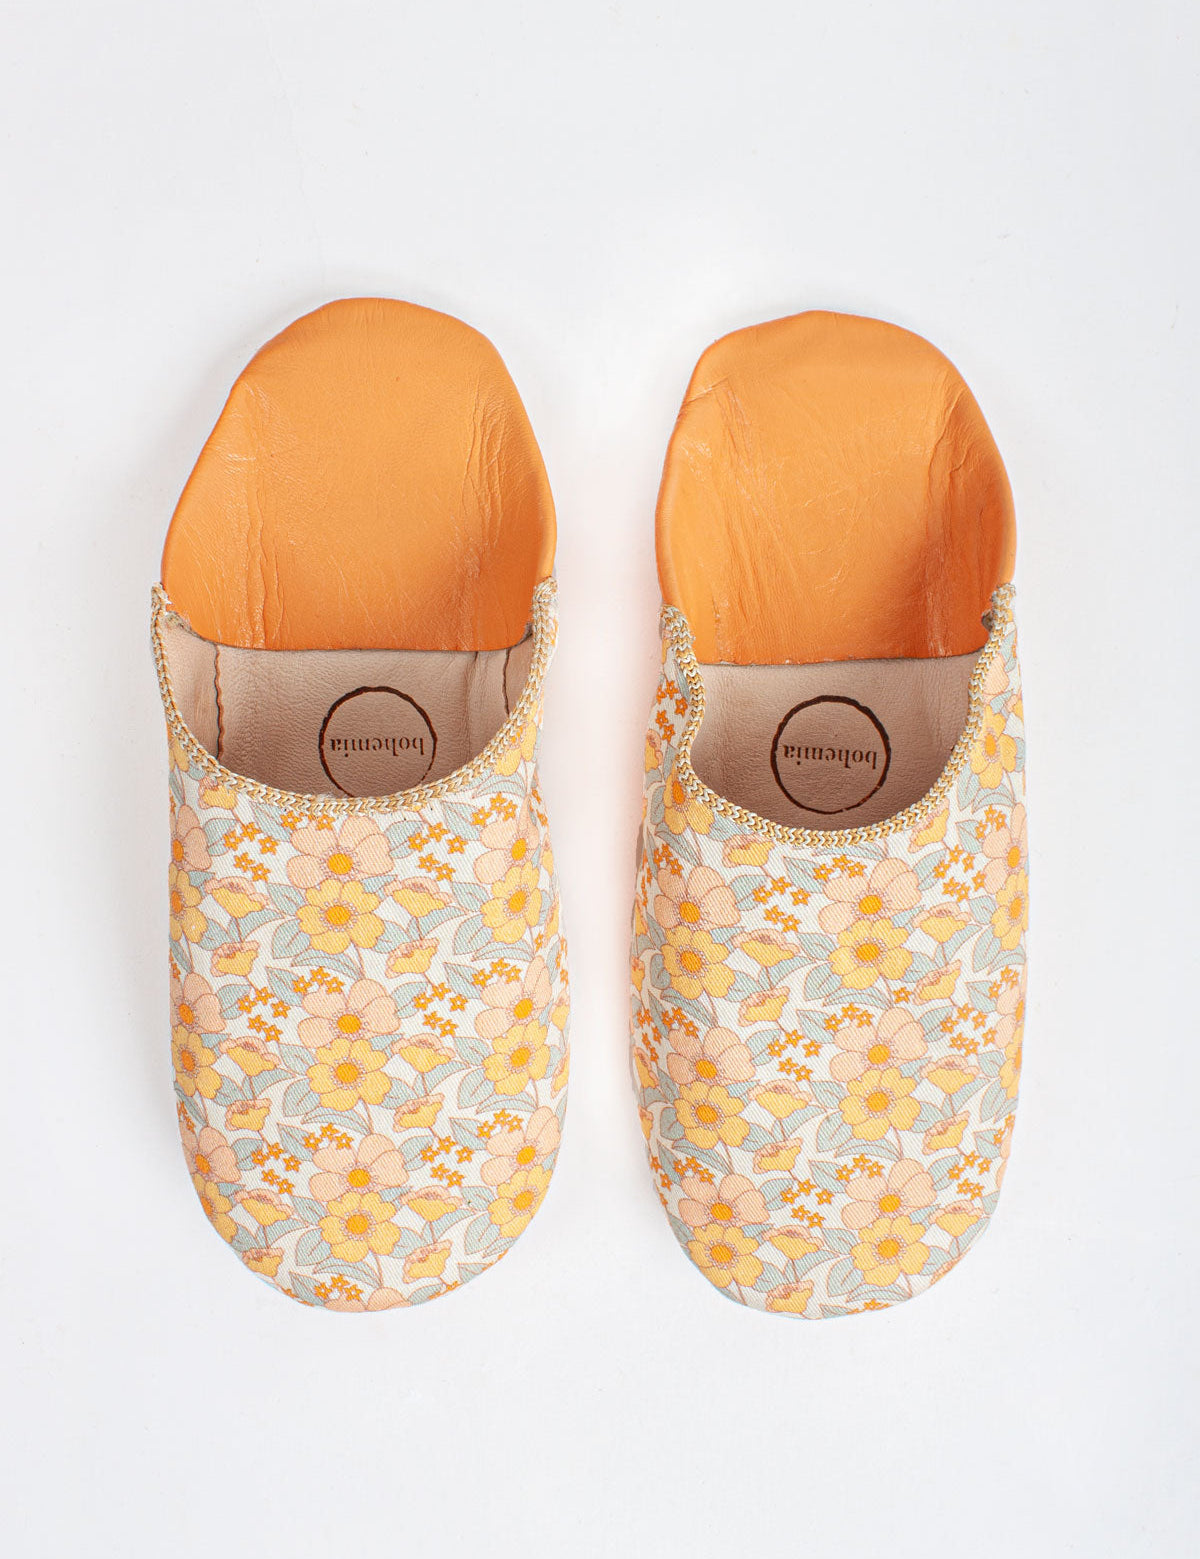 Bohemia-design-Morocaan-babouche-slippers-Margot-orange-leather-floral.jpg